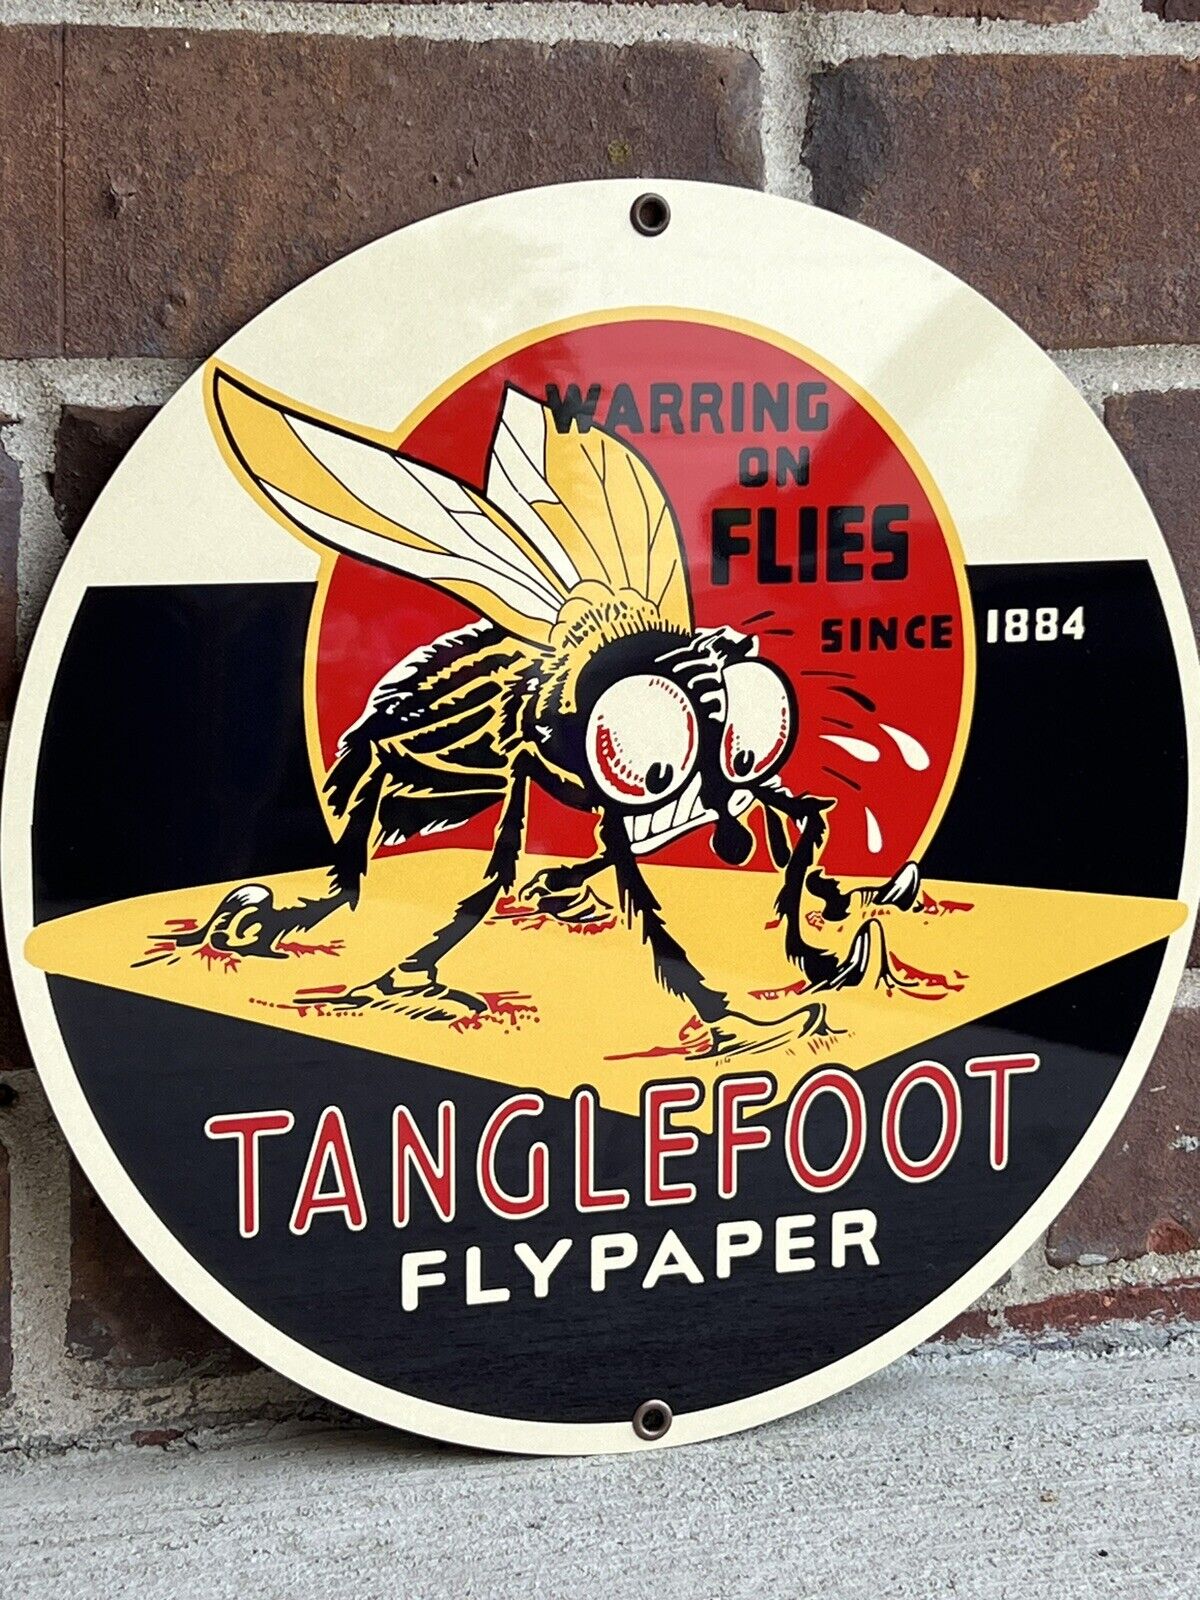 Tanglefoot Flypaper Hi Gloss Aluminum Vintage Style sign